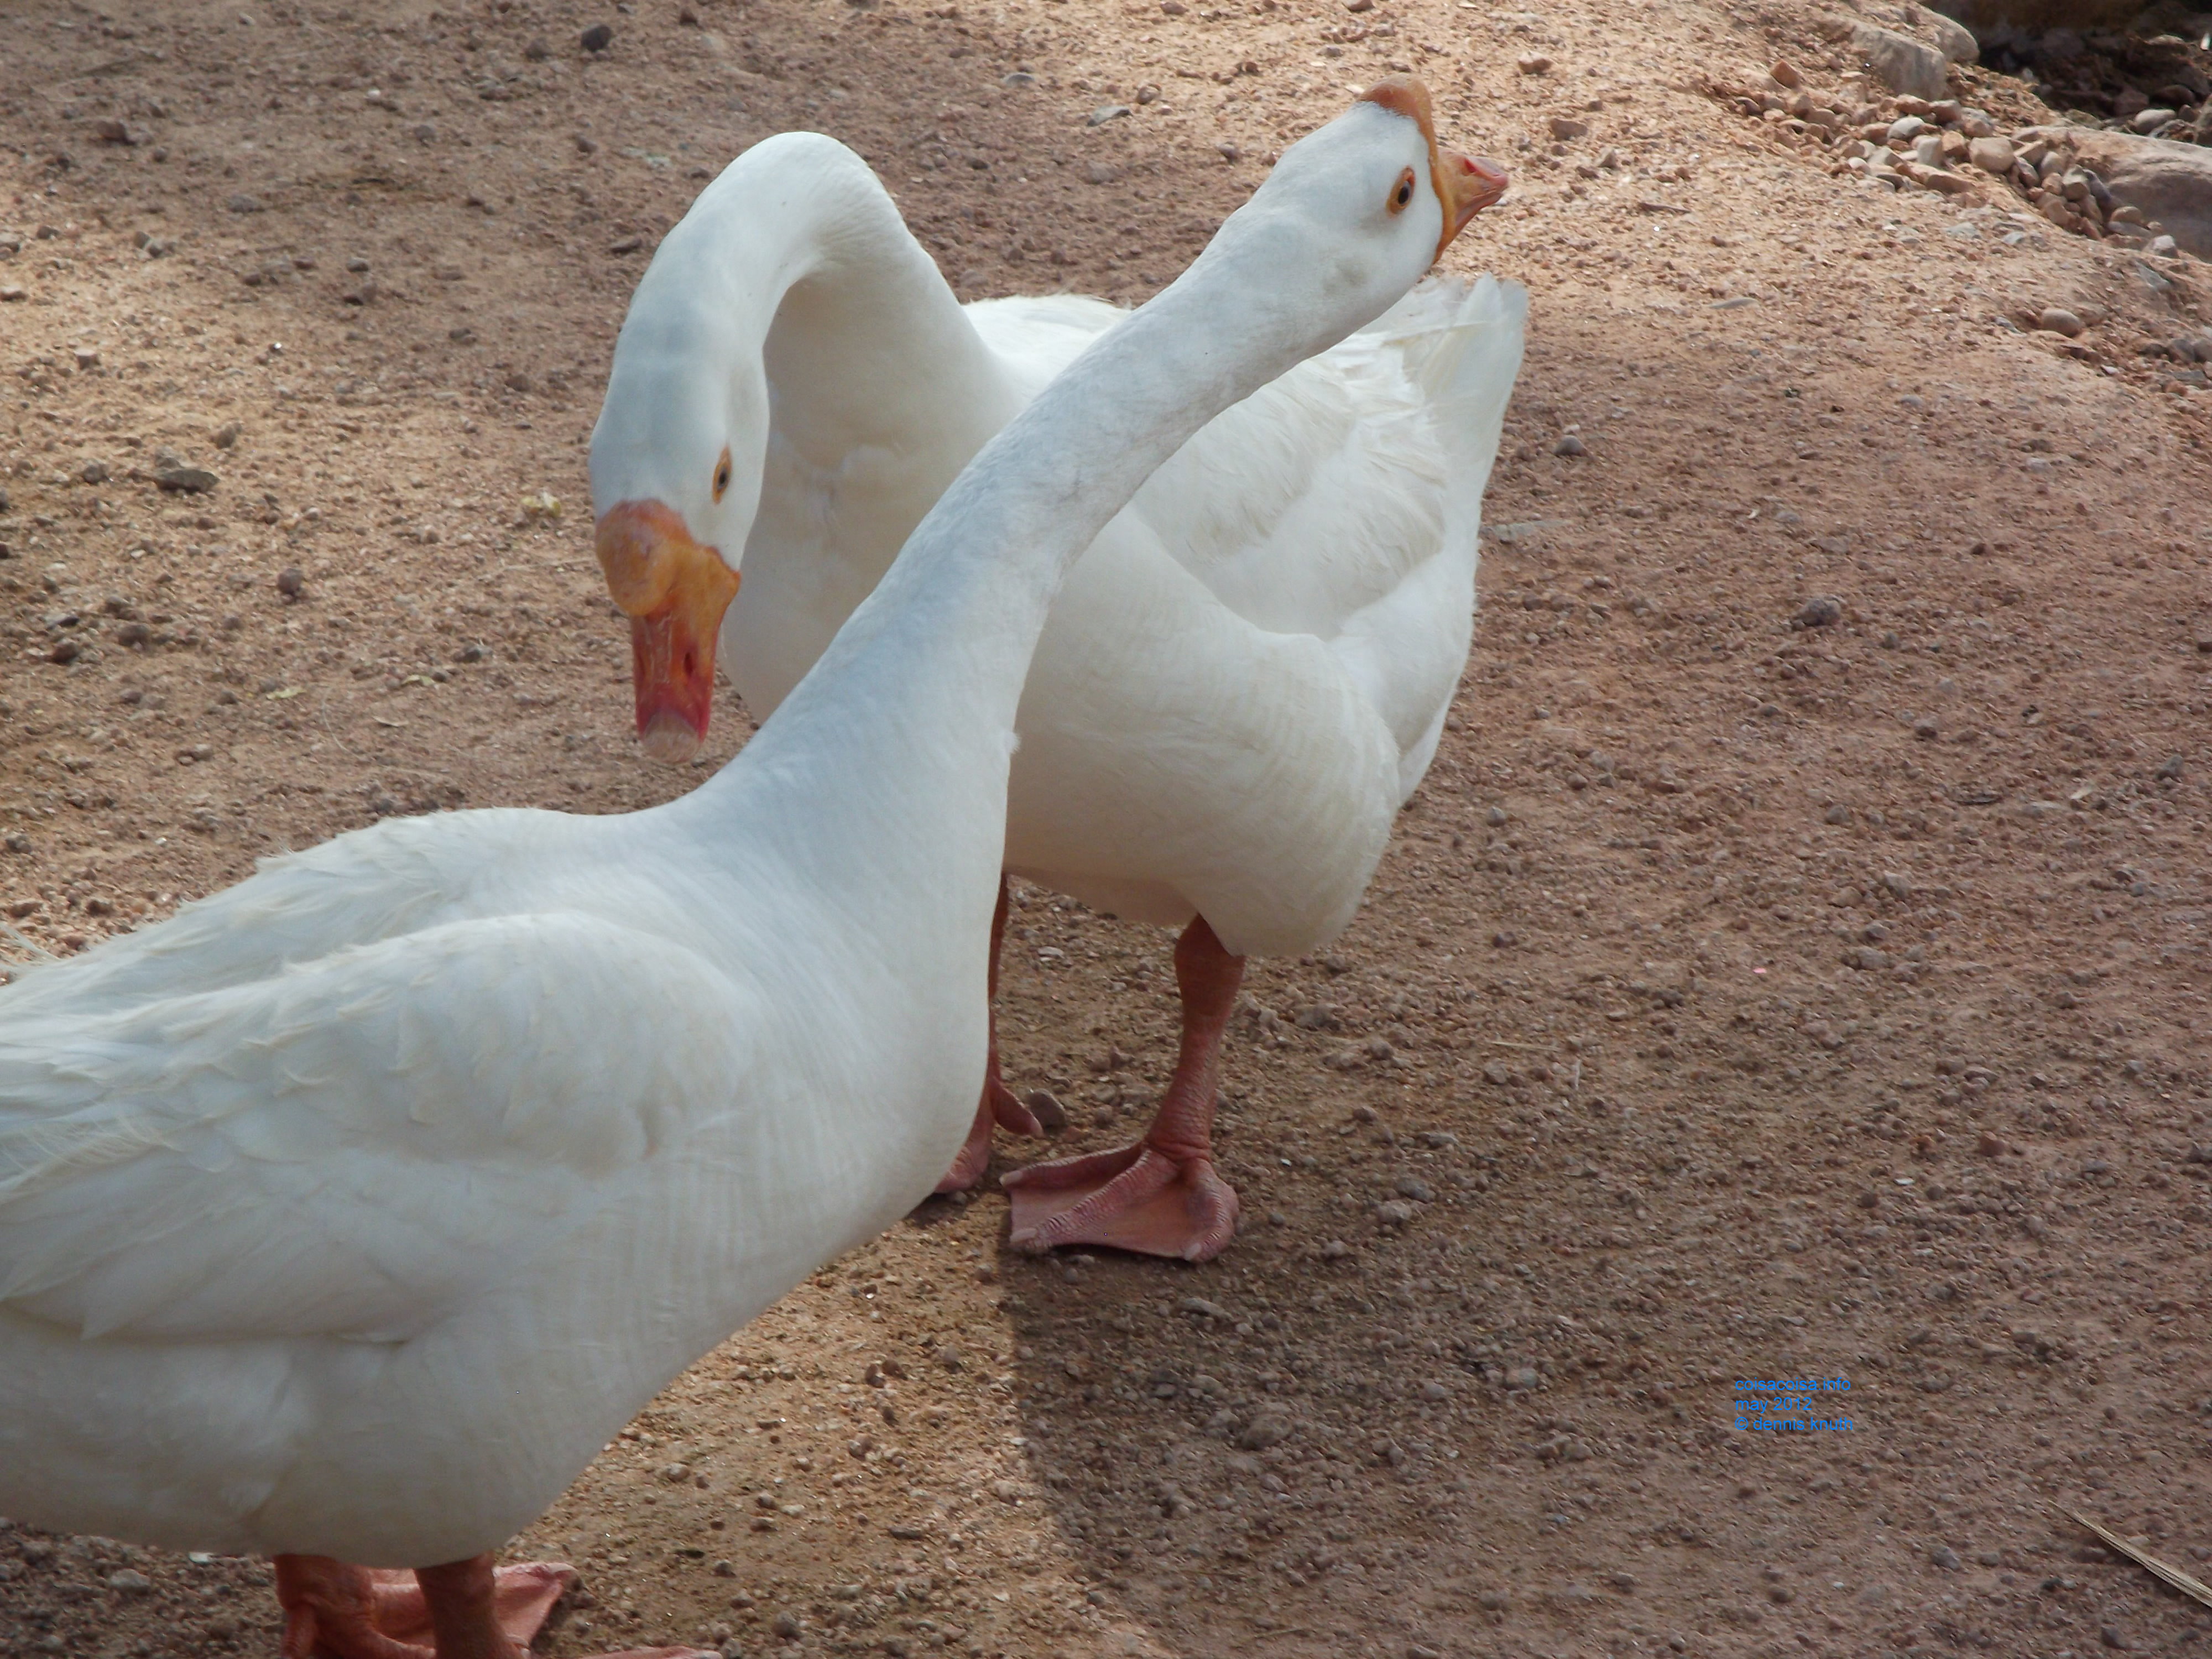 Geese in Papago Park in PHoenix